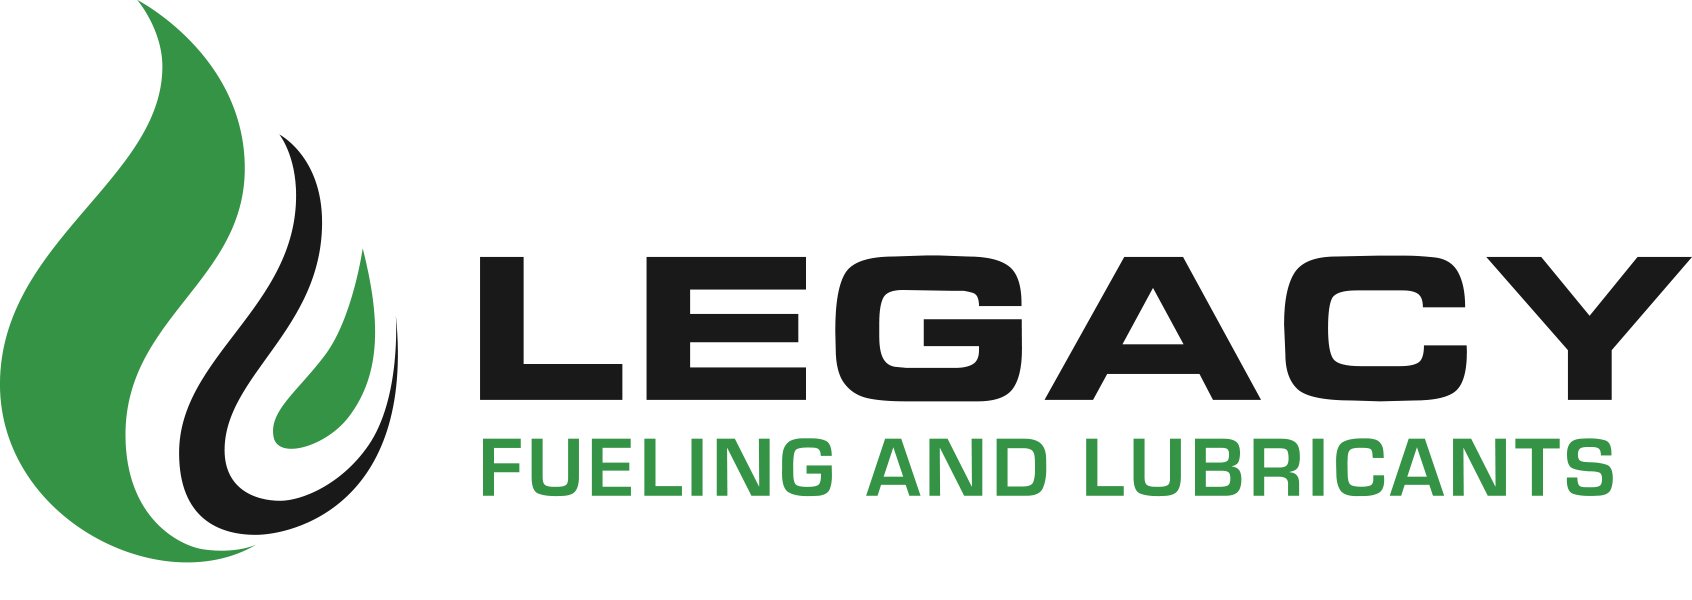 Automotive Lubricants Logo - Automotive | Legacy Fuels & Lubricants